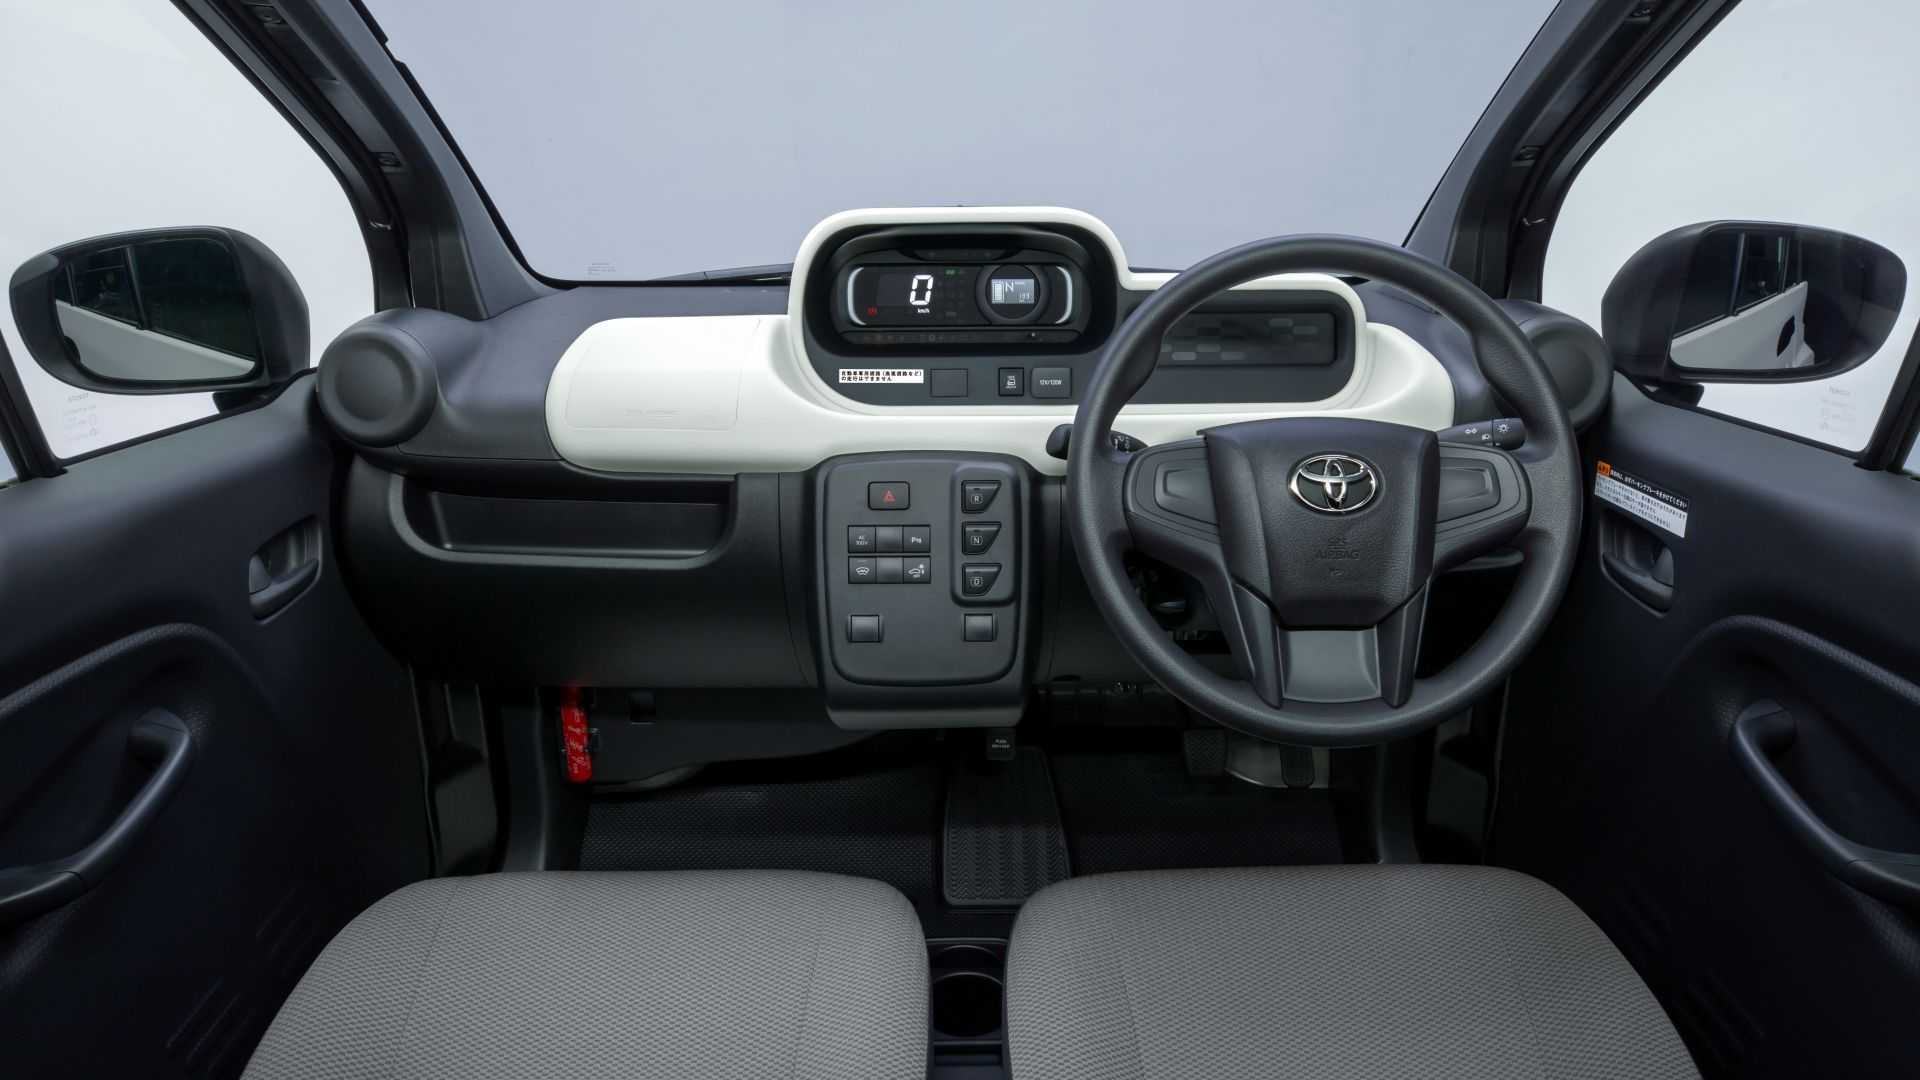 Toyota Cpod EV 18 - Toyota C+pod EV Photos Gallery